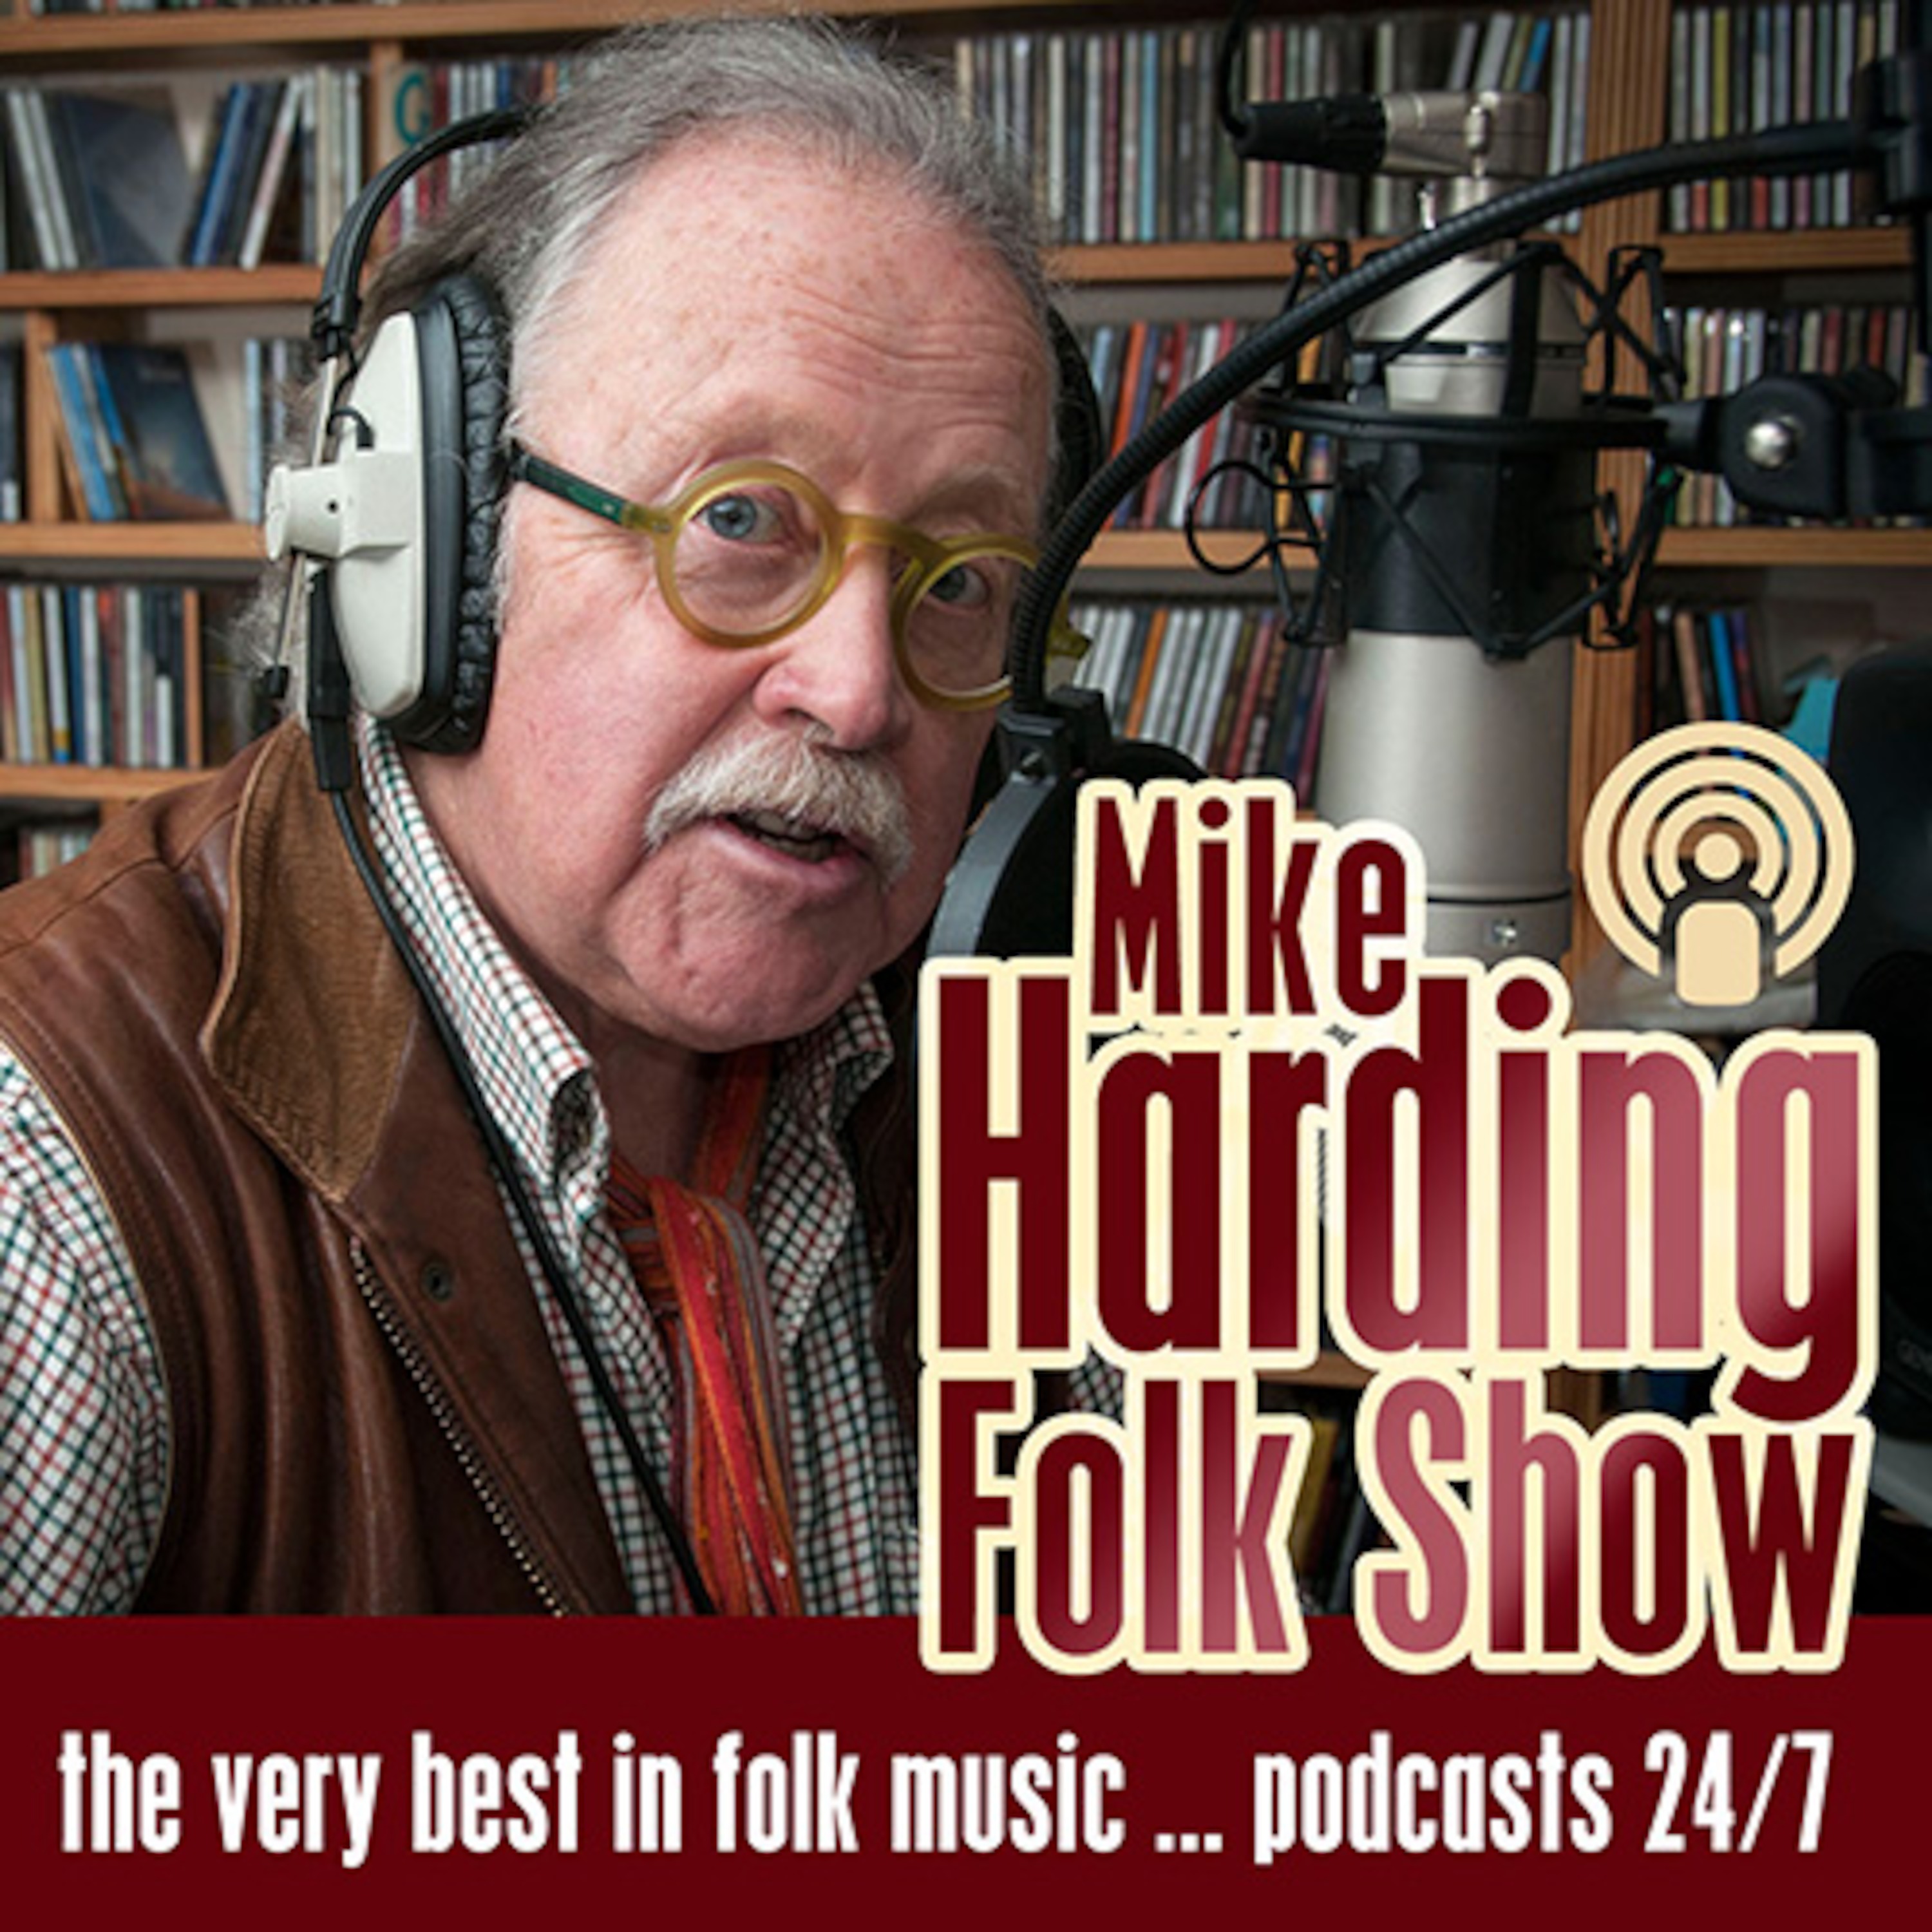 Mike Harding Folk Show 66